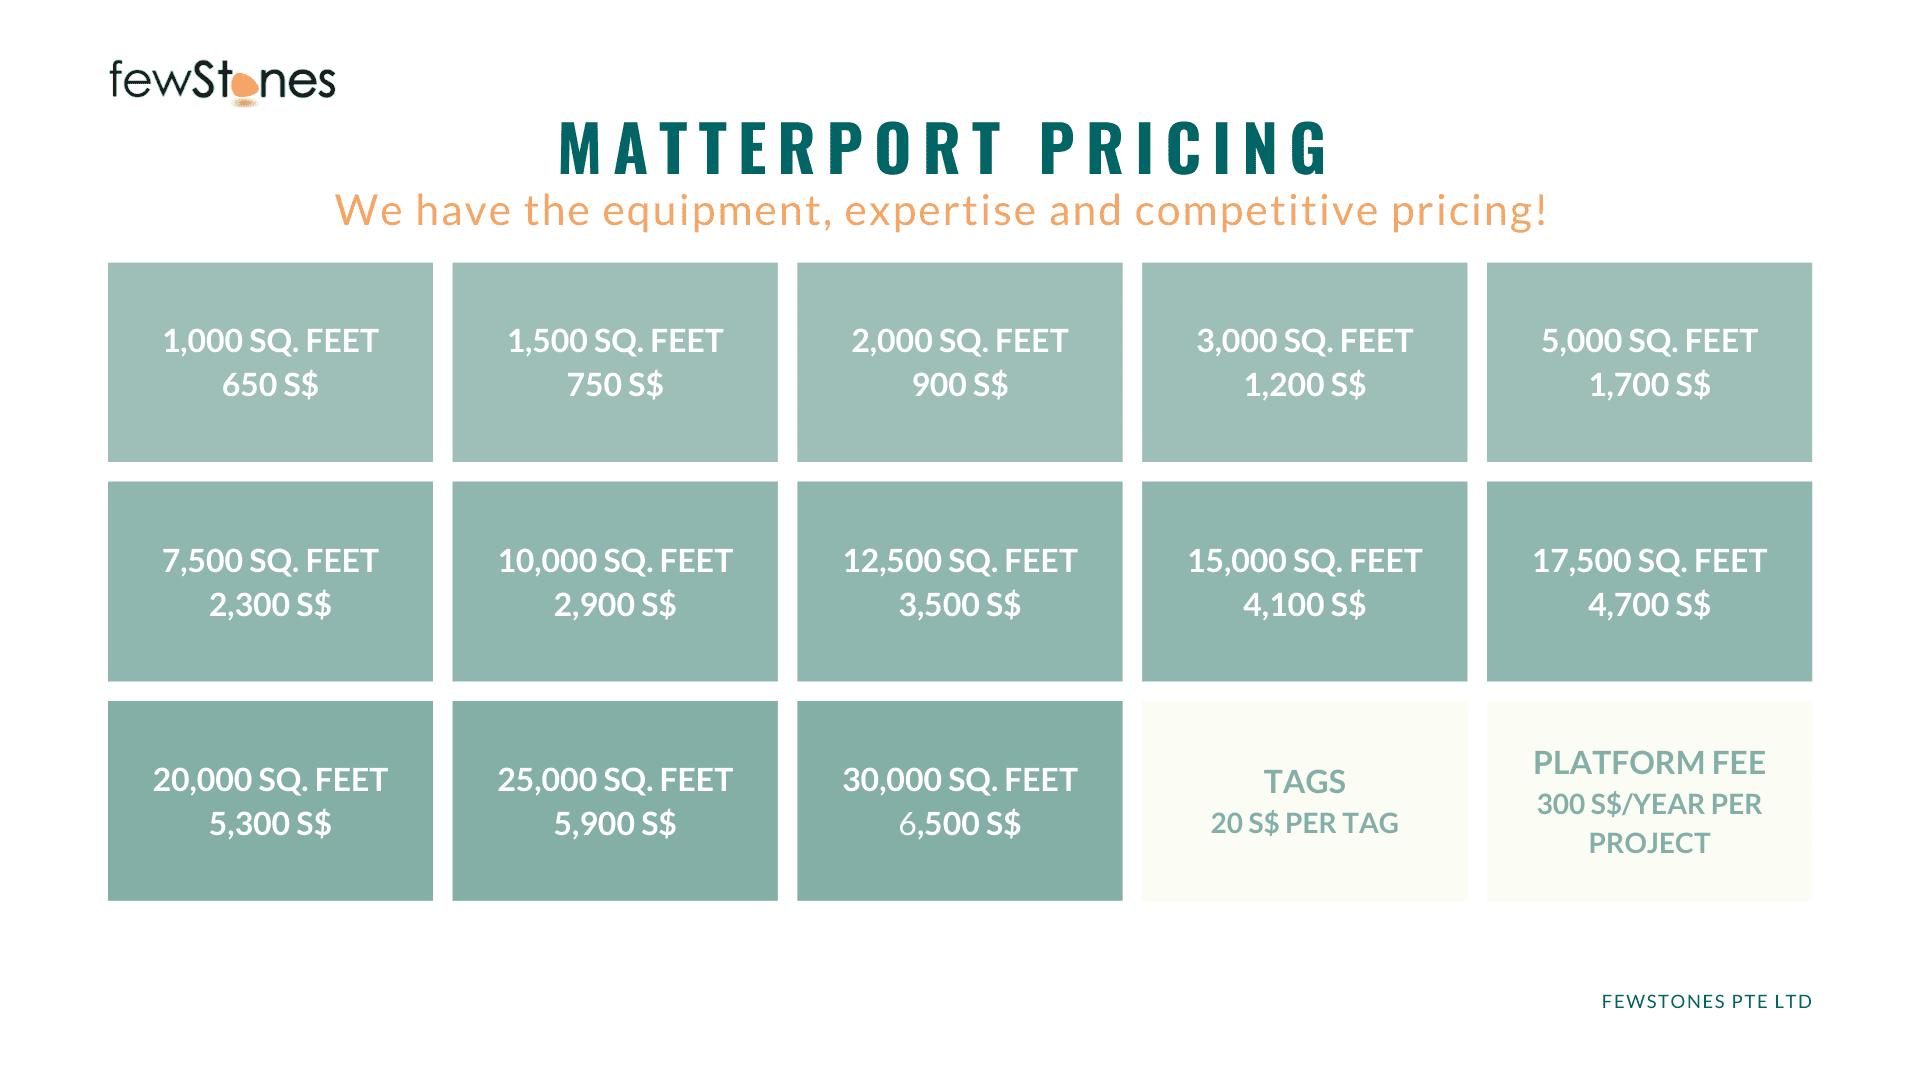 fewstones matterport pricing